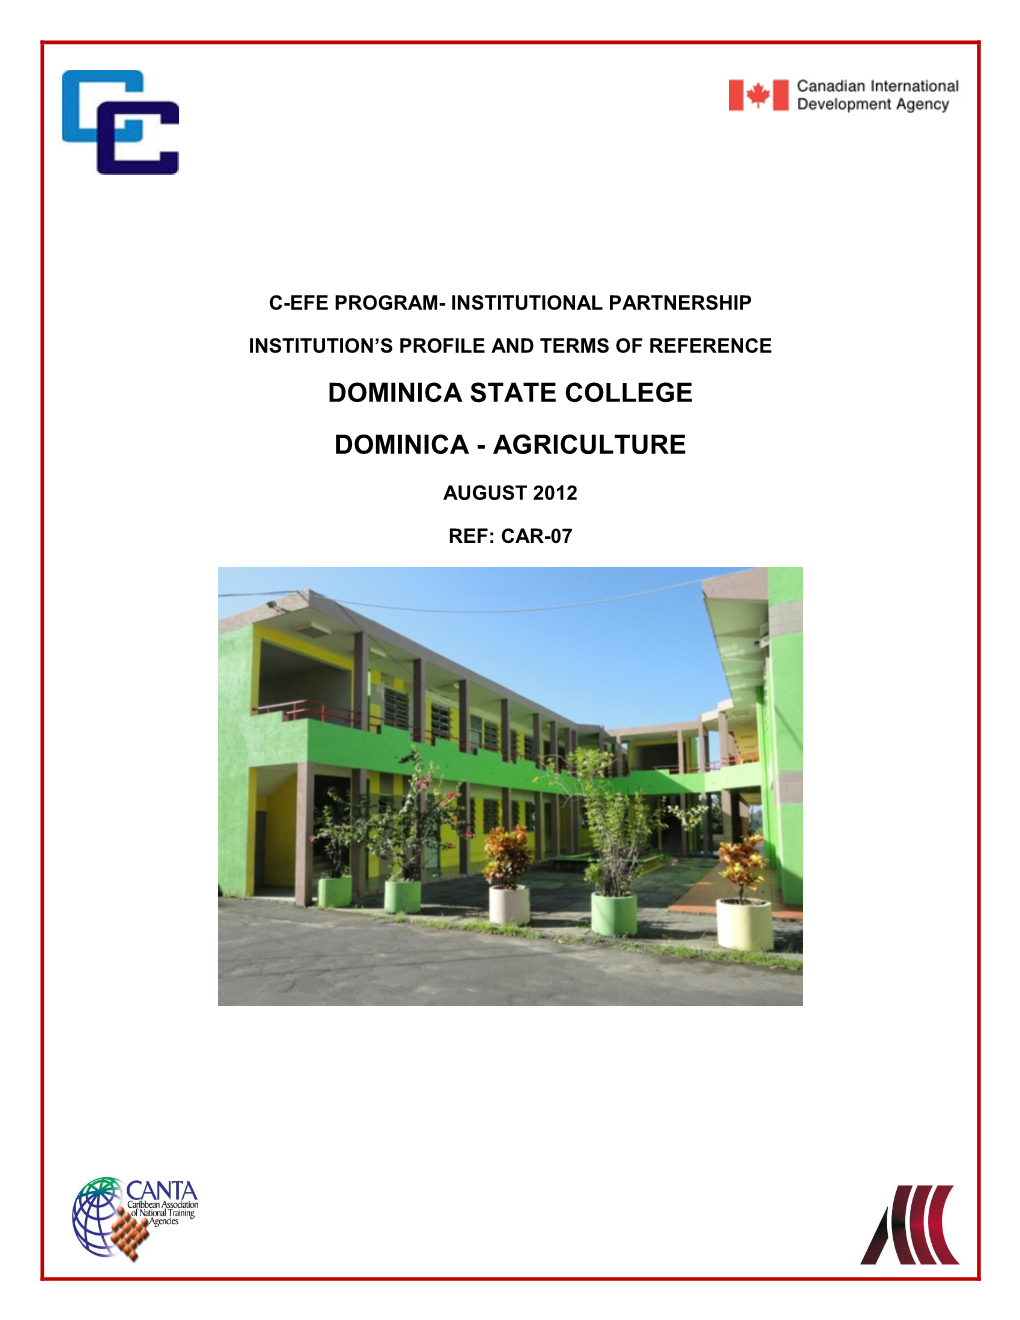 Dominica State College Dominica - Agriculture